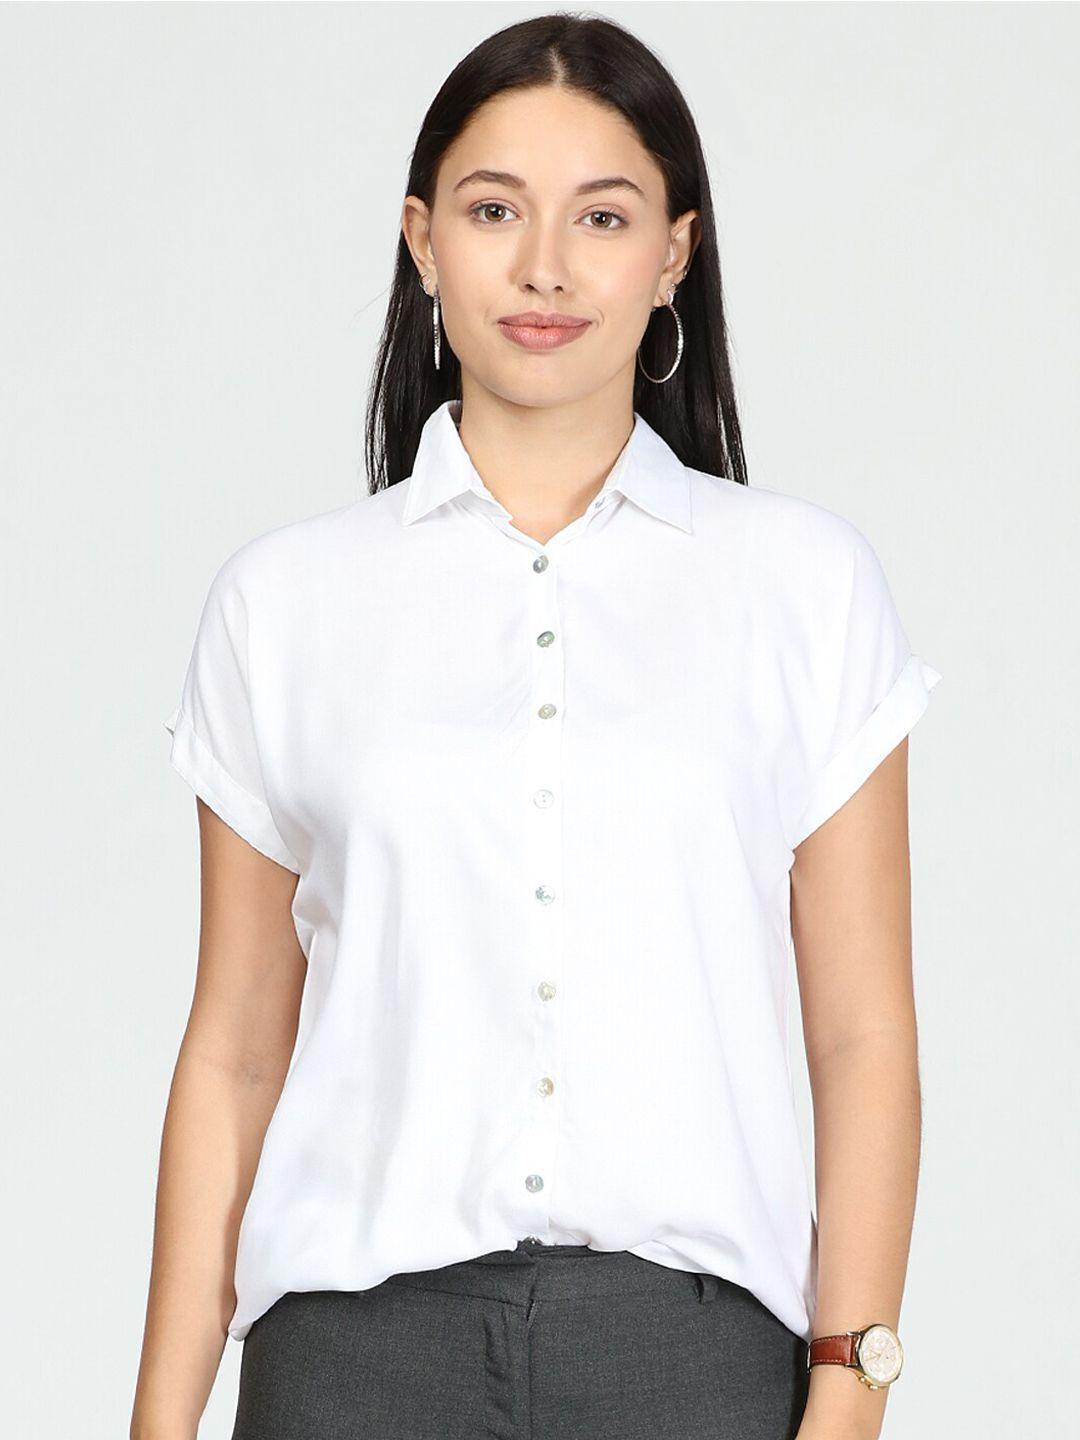 idk white shirt style top